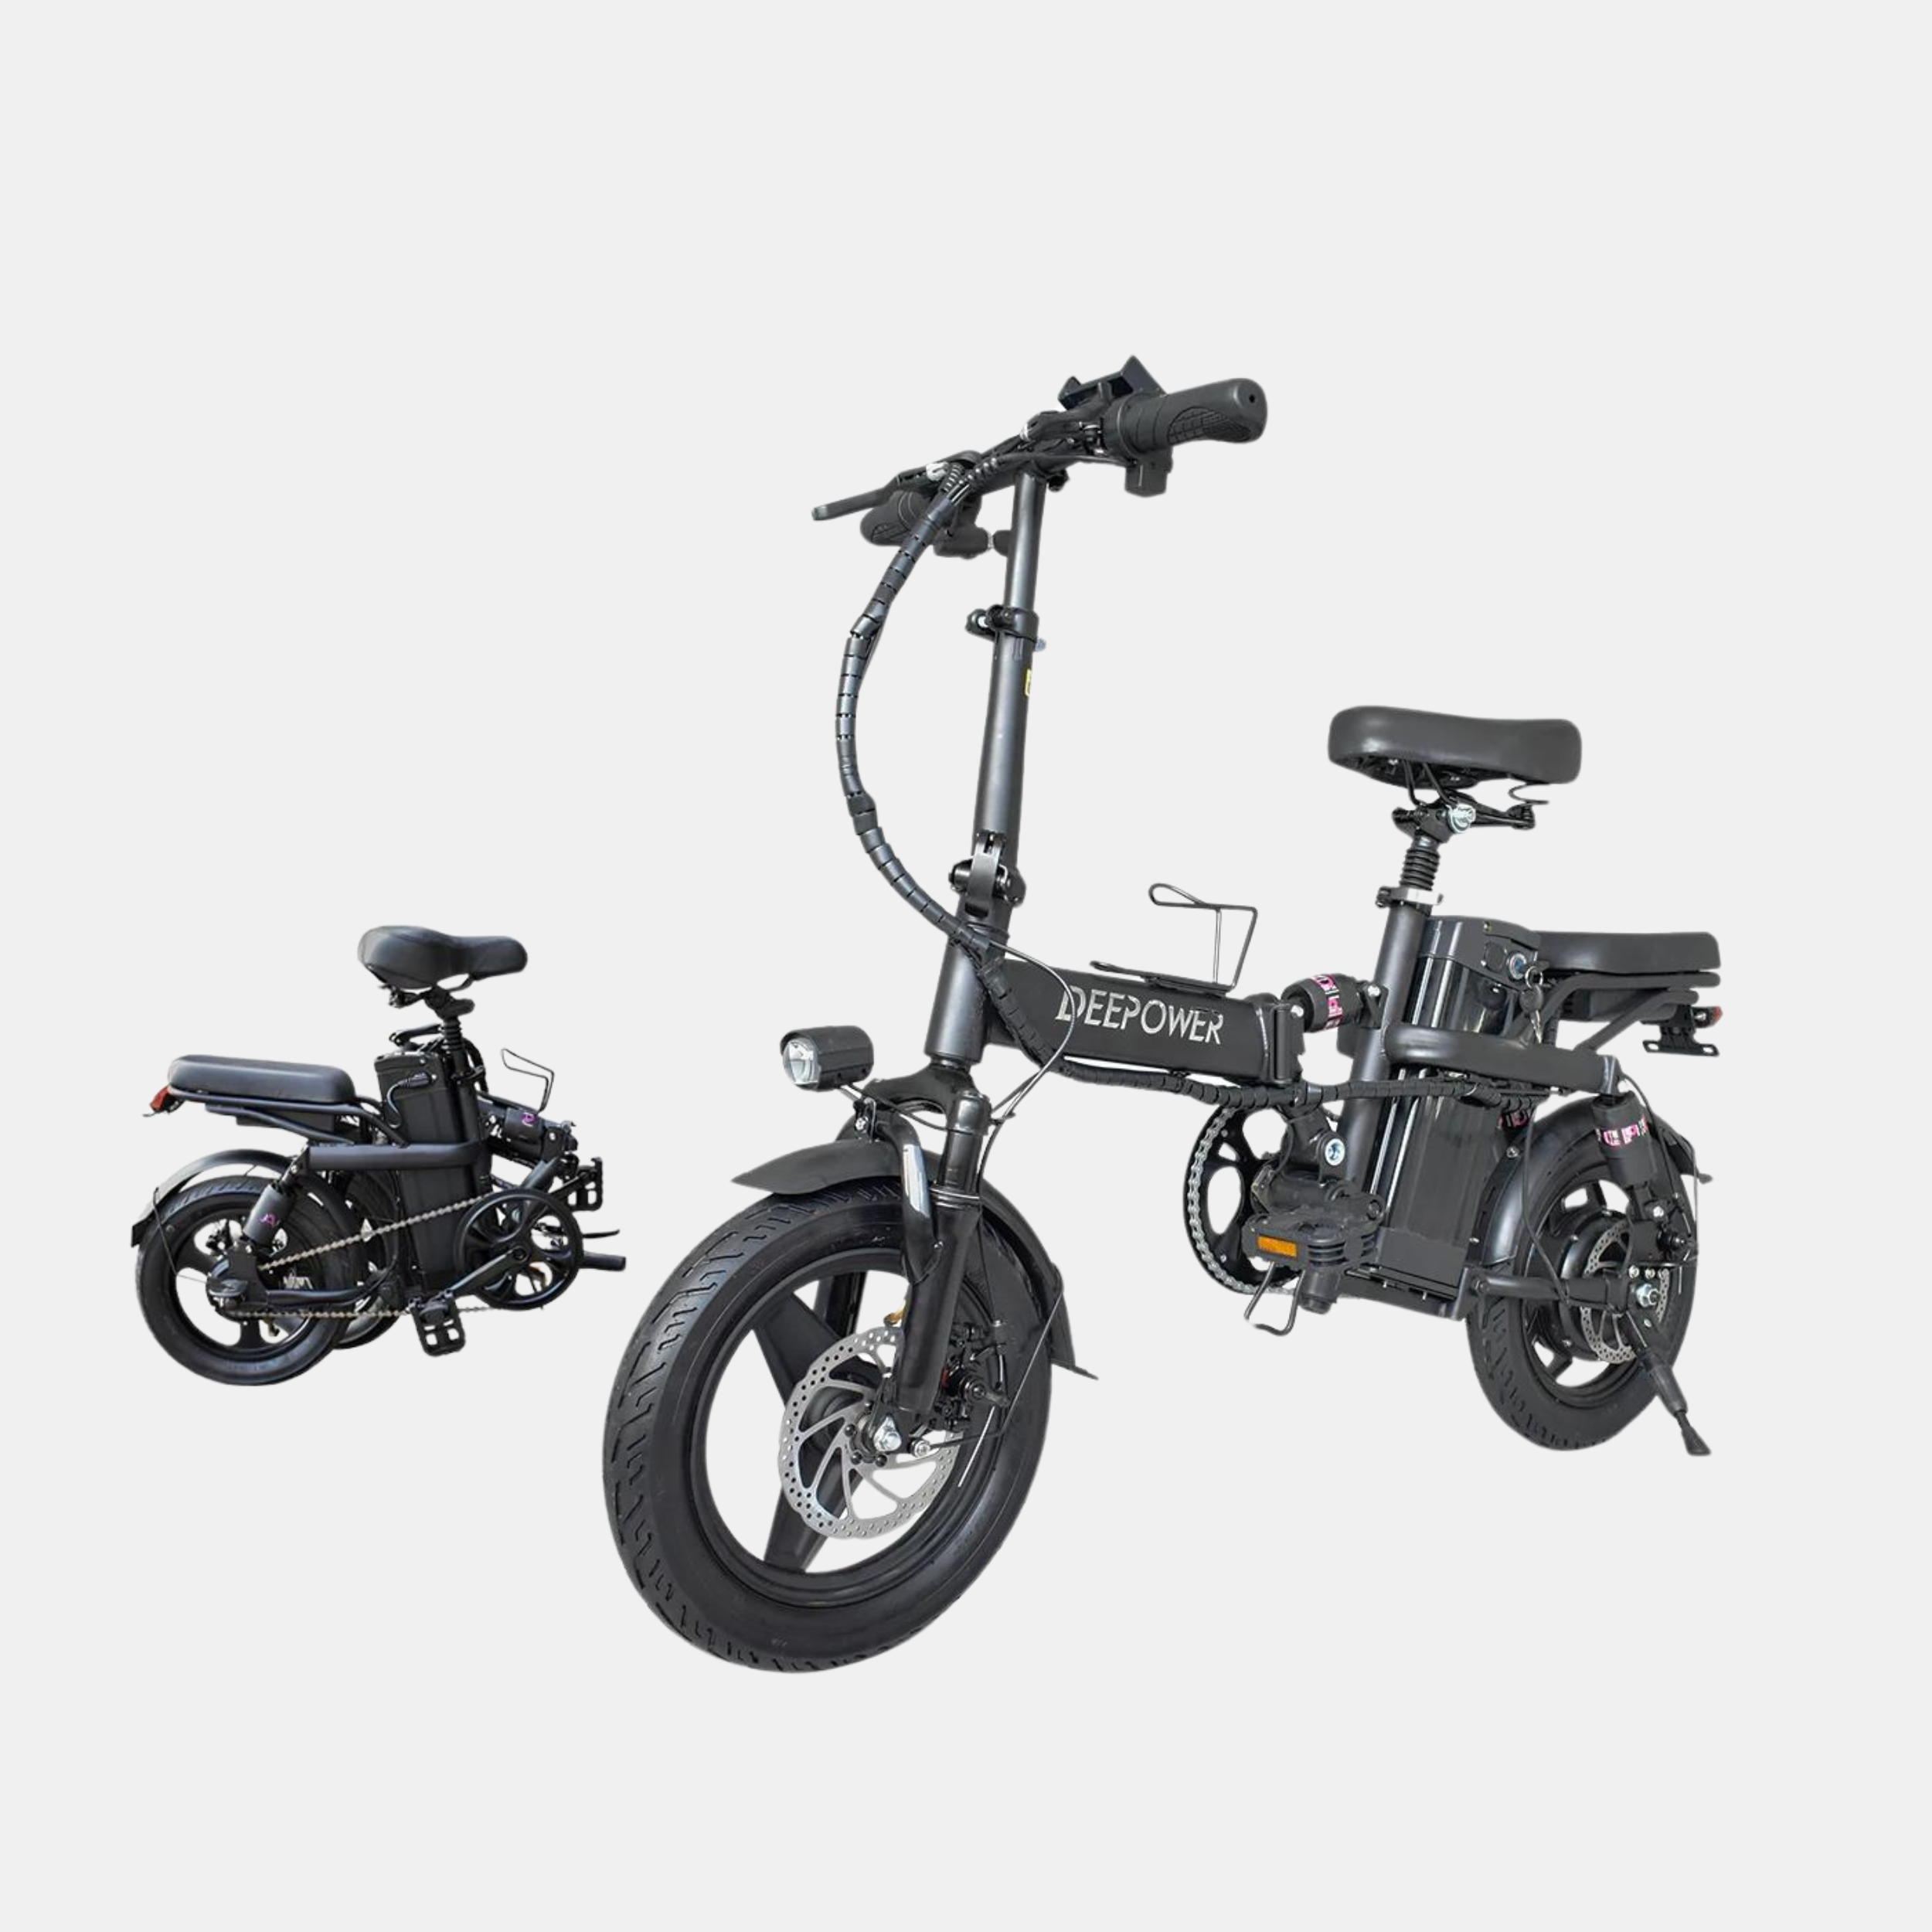 EPIC DEEPOWER Mini Foldable Ebike: Ride the Revolution